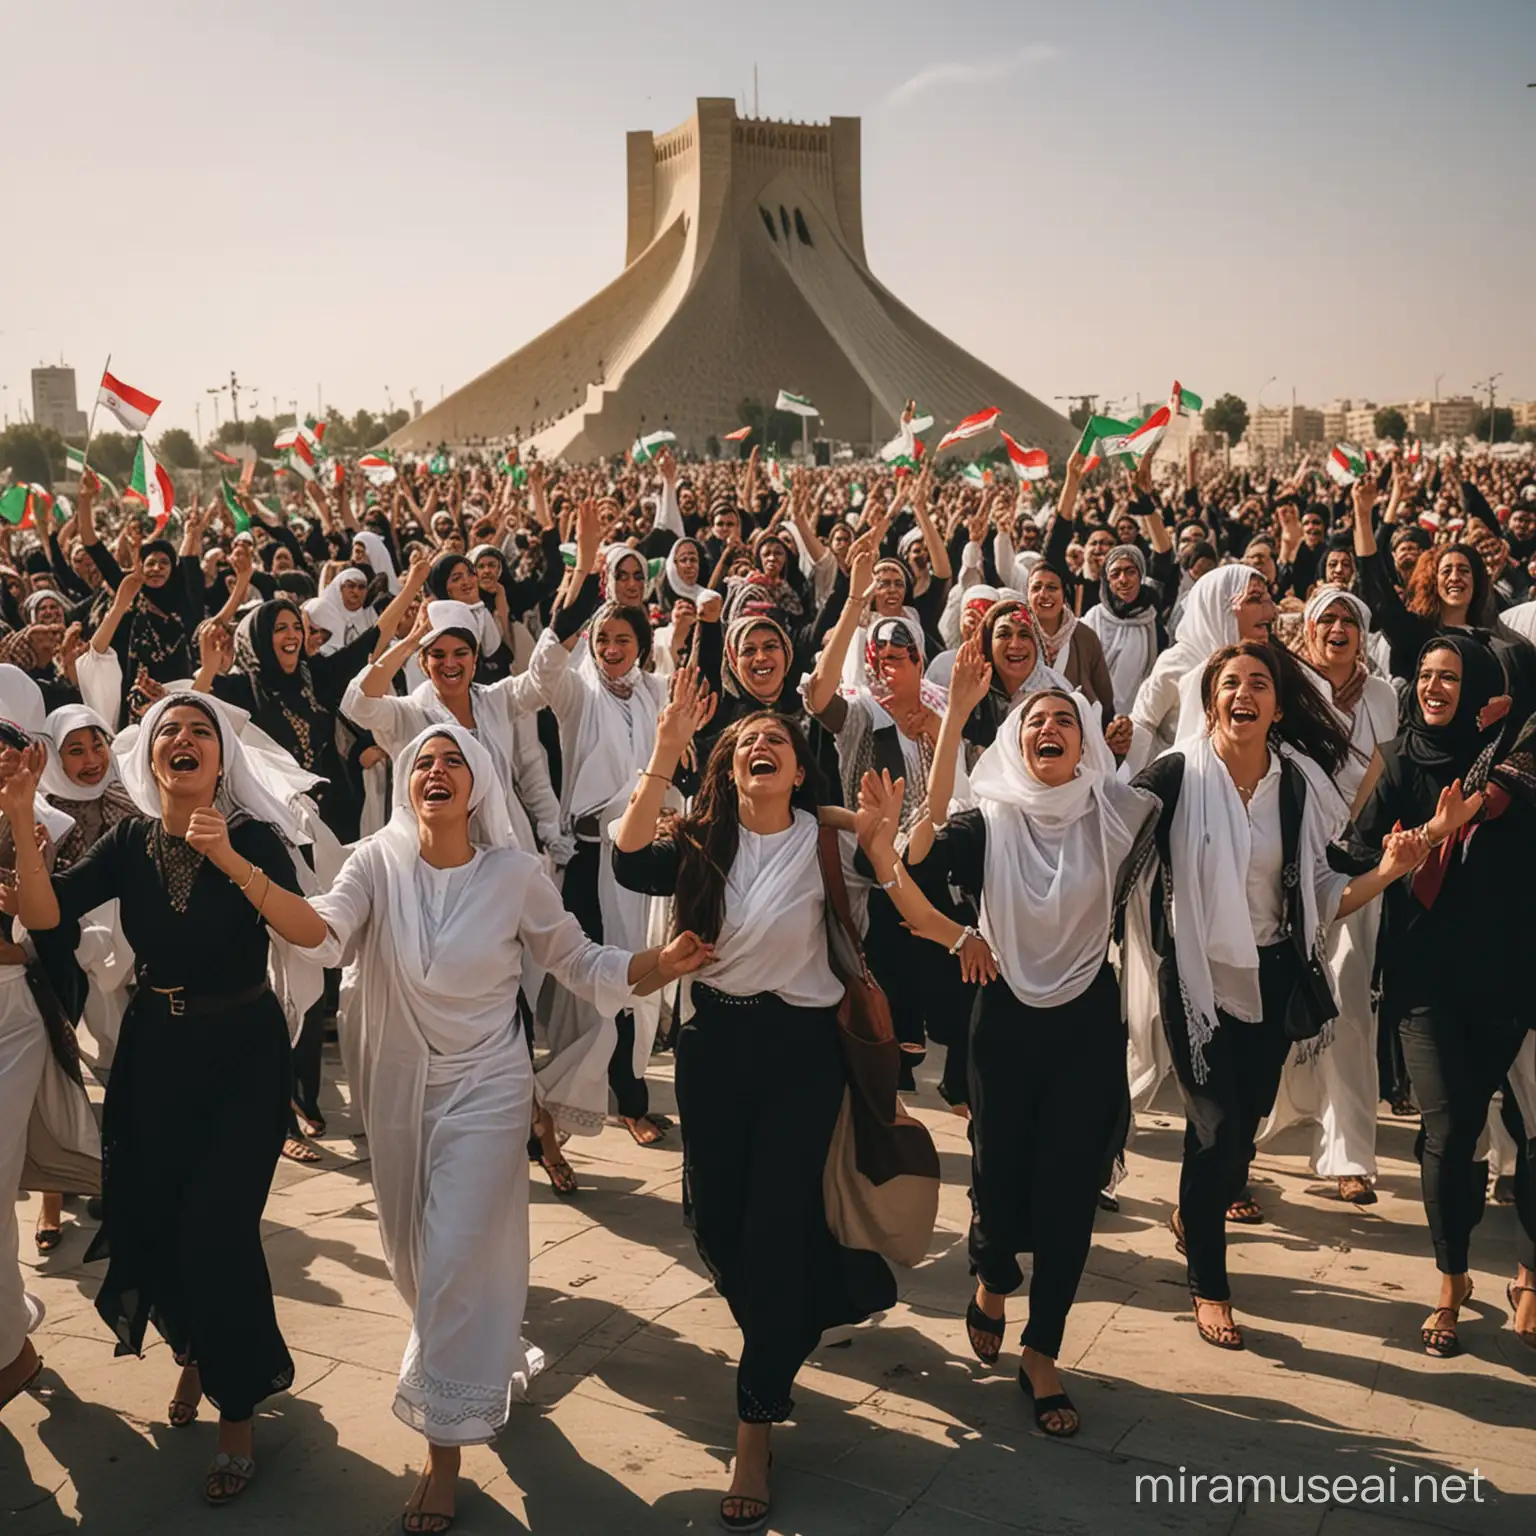 Joyful Celebration of Iranian Freedom at Azadi Tower with Dancing Men and Women